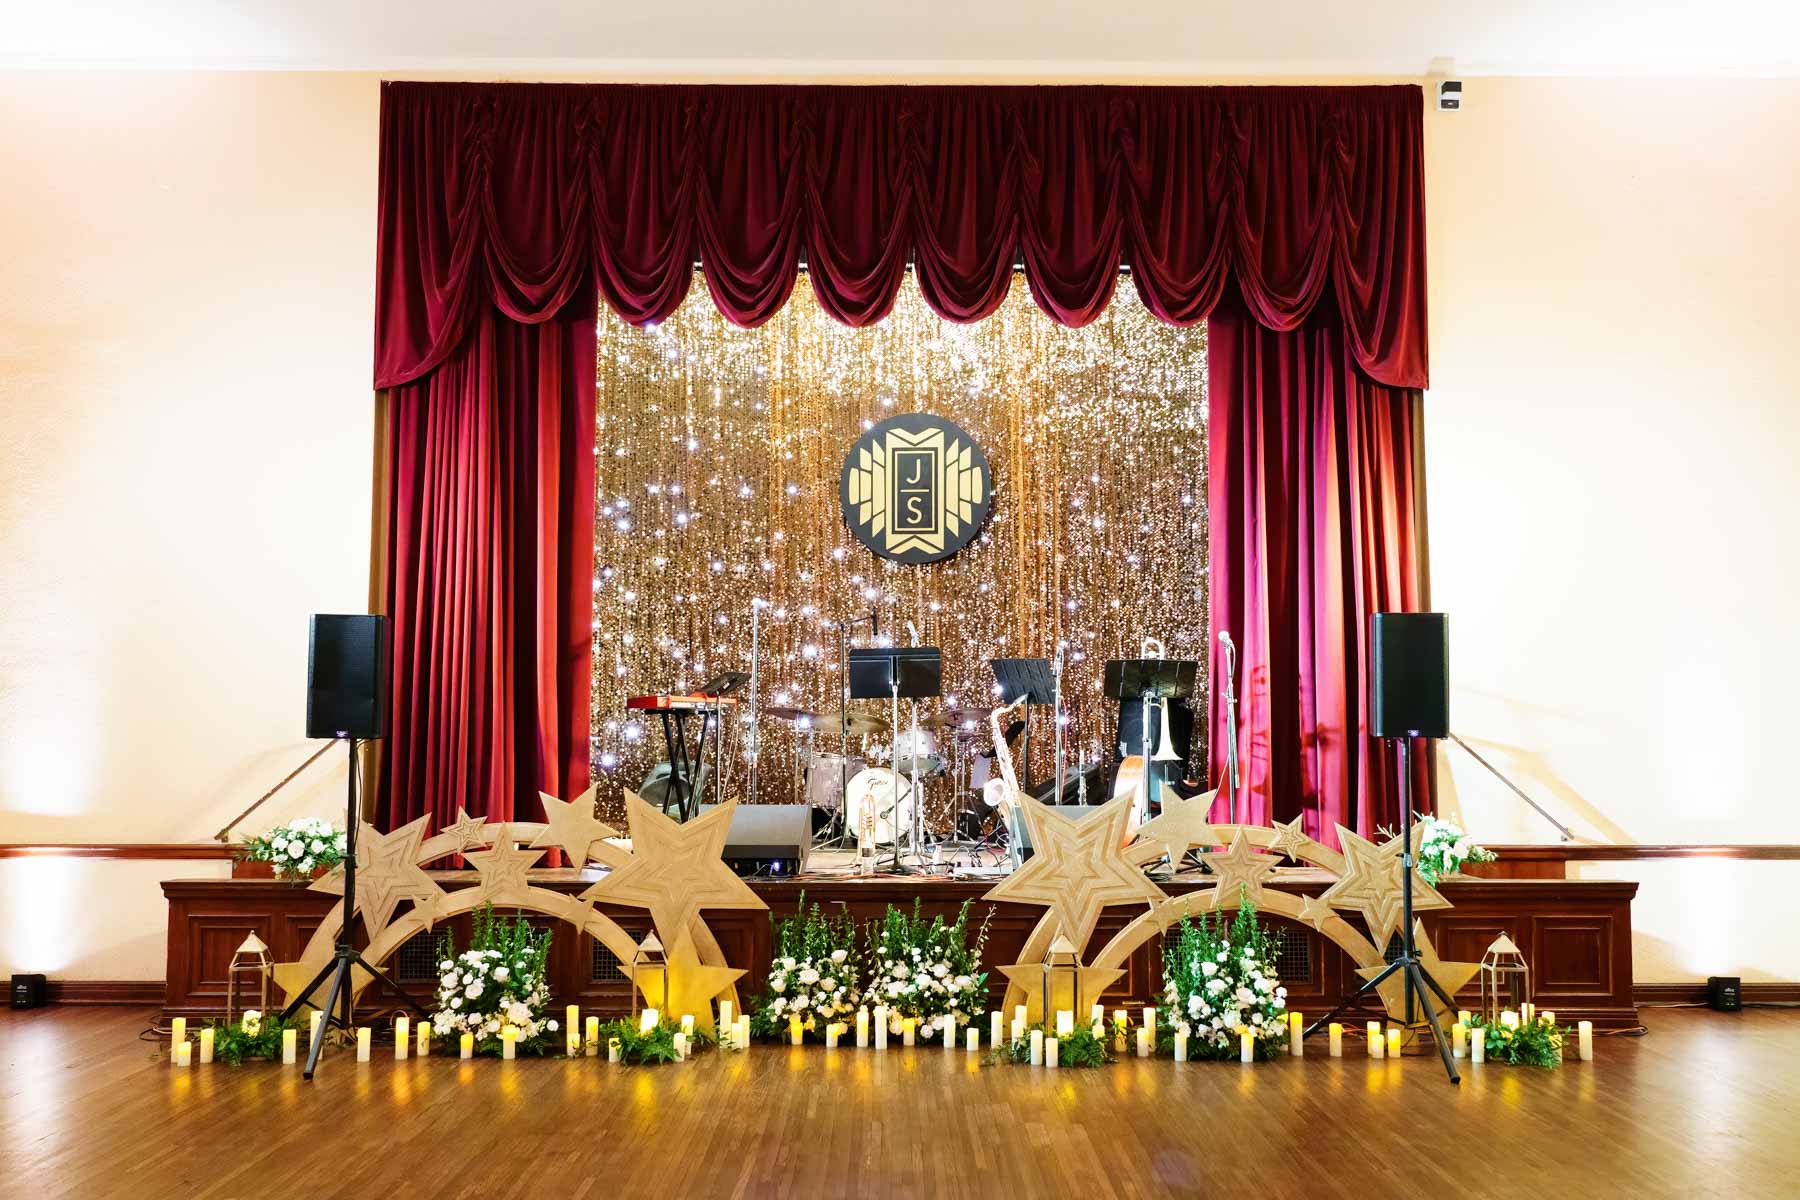 custom gold backdrop on wedding stage